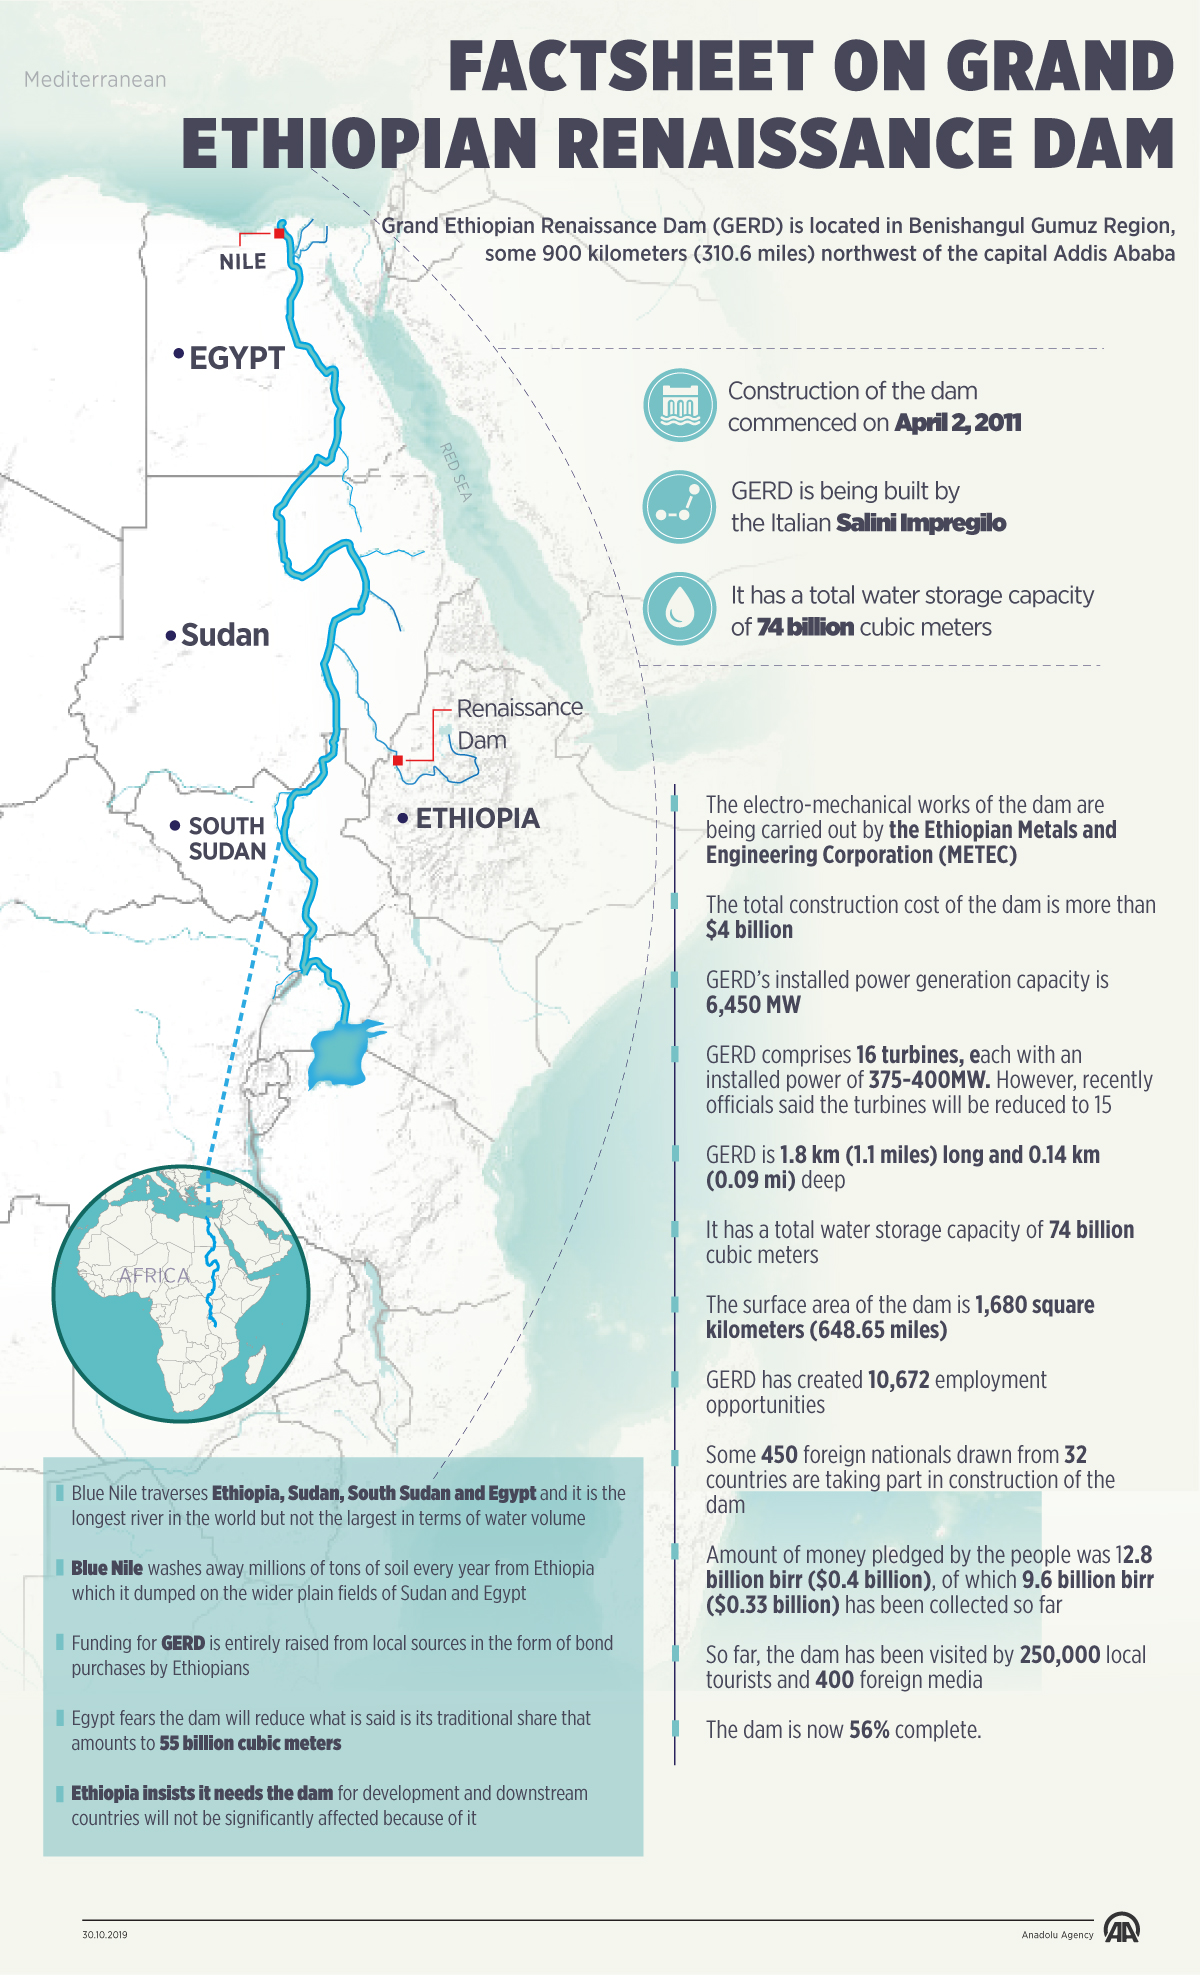 Factsheet on Grand Ethiopian Renaissance Dam